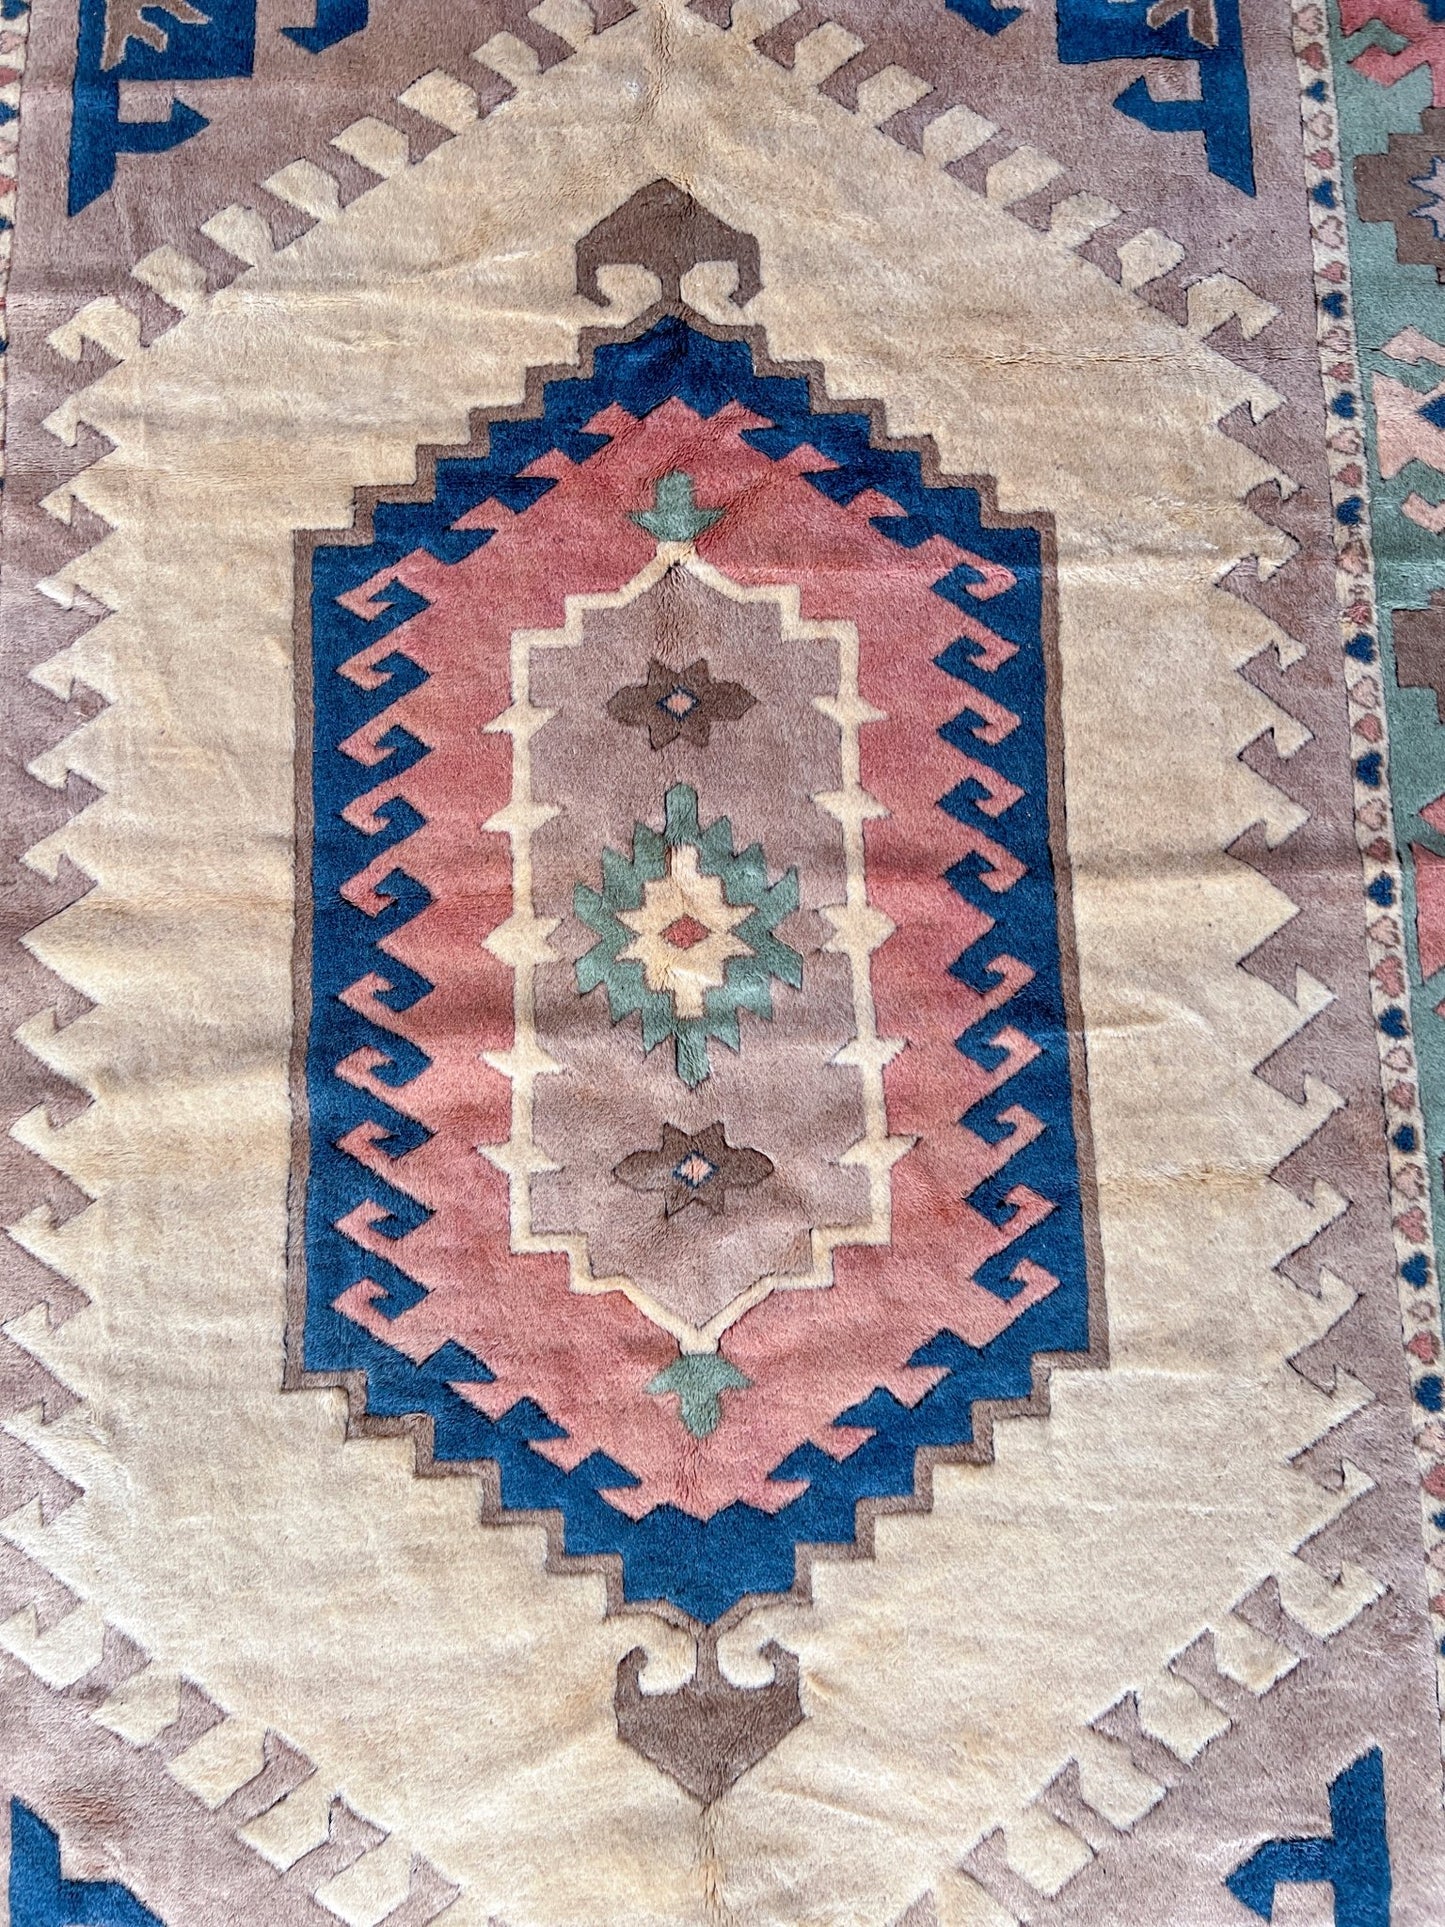 konya handmade wool large turkish rug shop san francisco bay area palo alto. Vintage rug store berkeley rug shop online